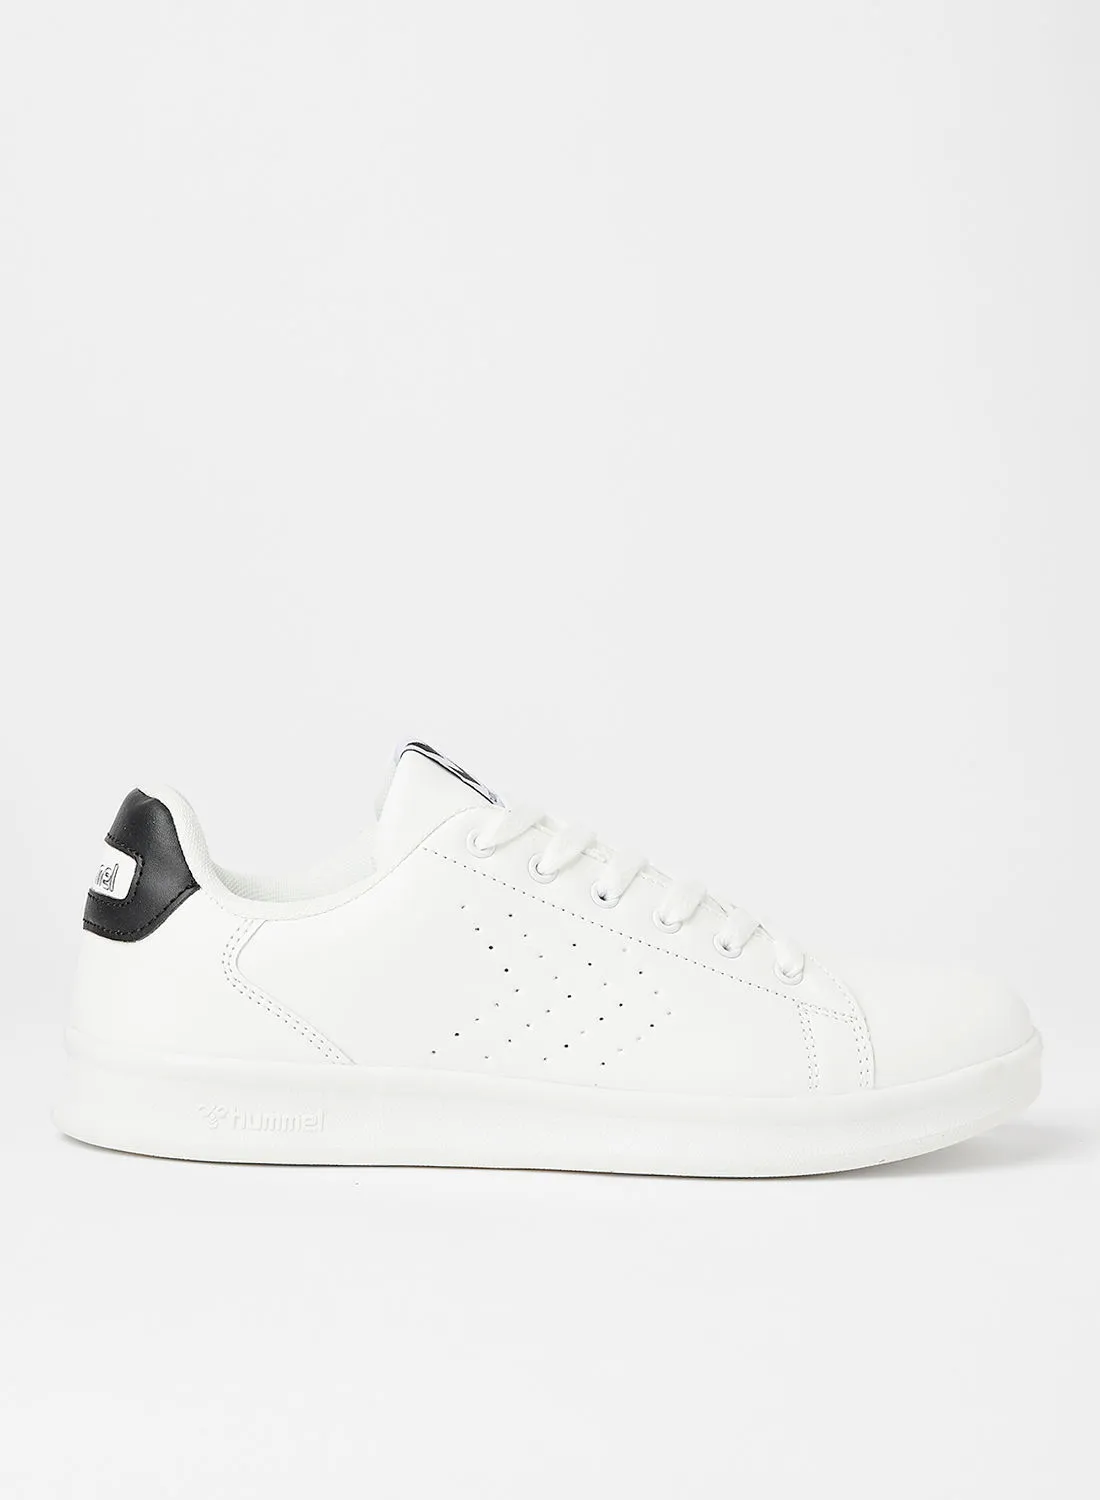 Hummel Busan Low Top Sneakers White/Black